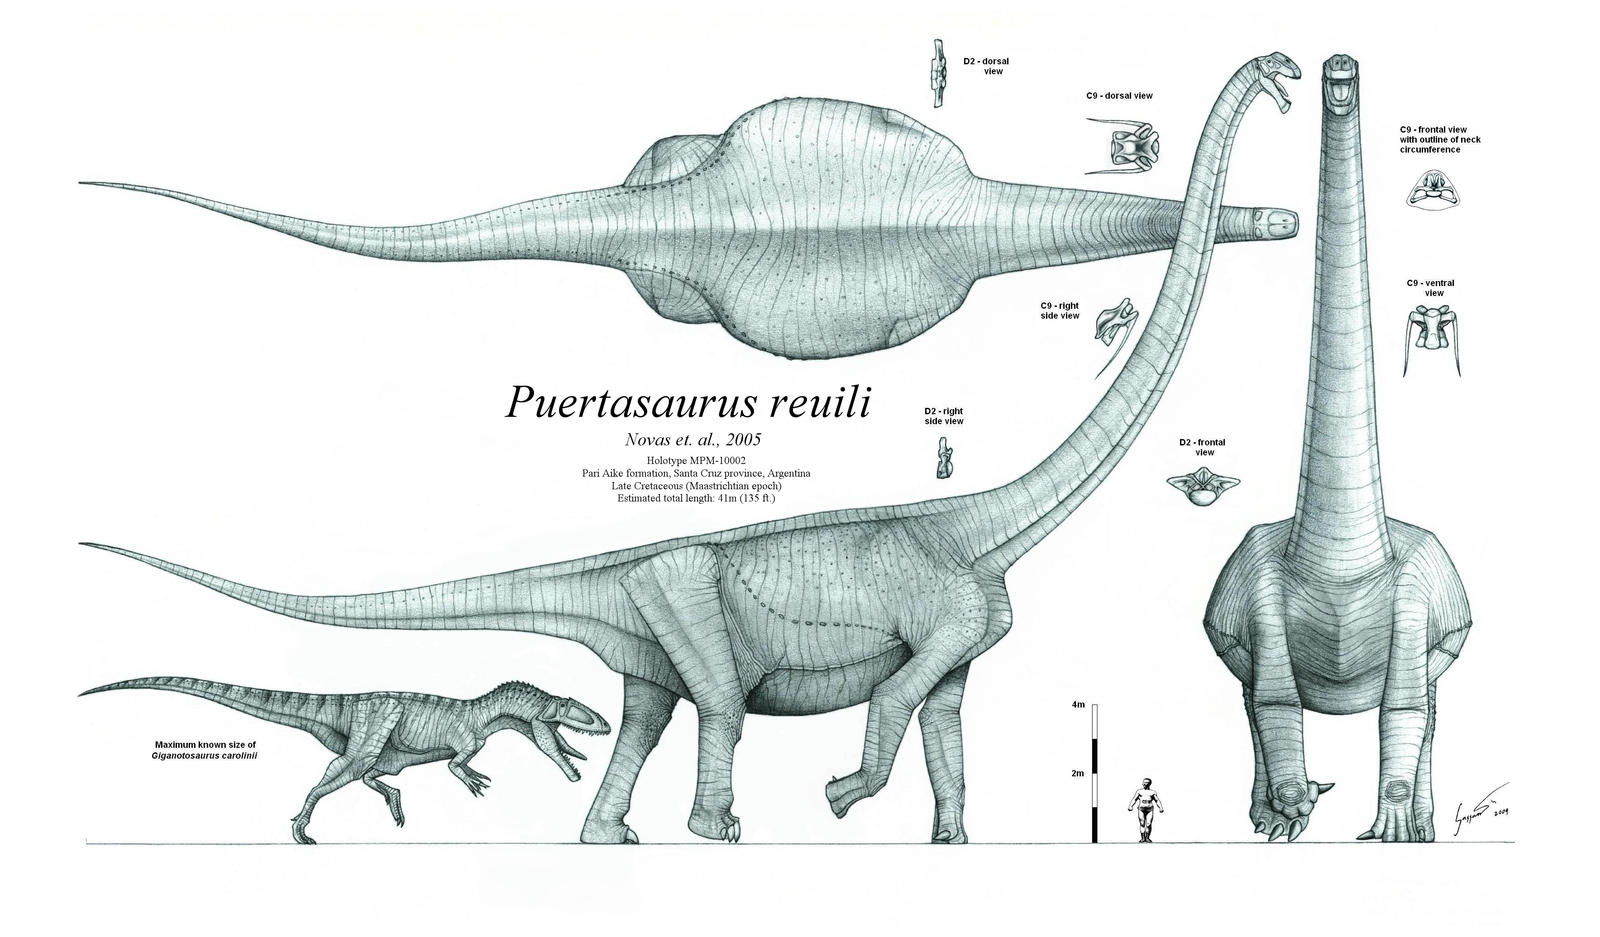 Puertasaurus reuili by Paleo-King on DeviantArt